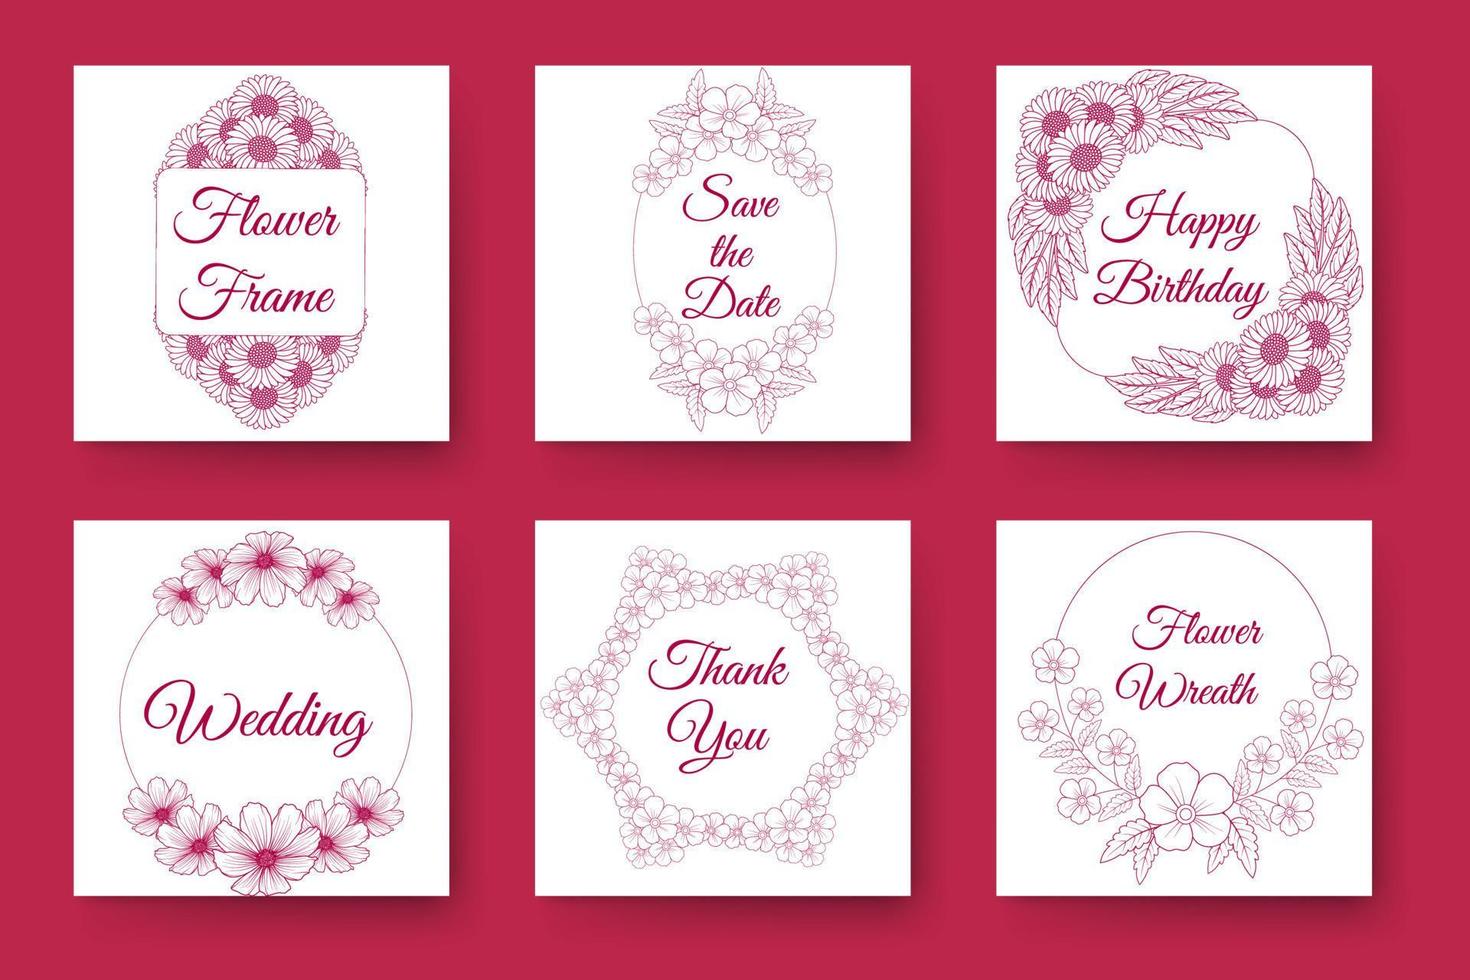 flowers and floral wreath wedding invitation frame design with elegant viva magenta backgrounds vector